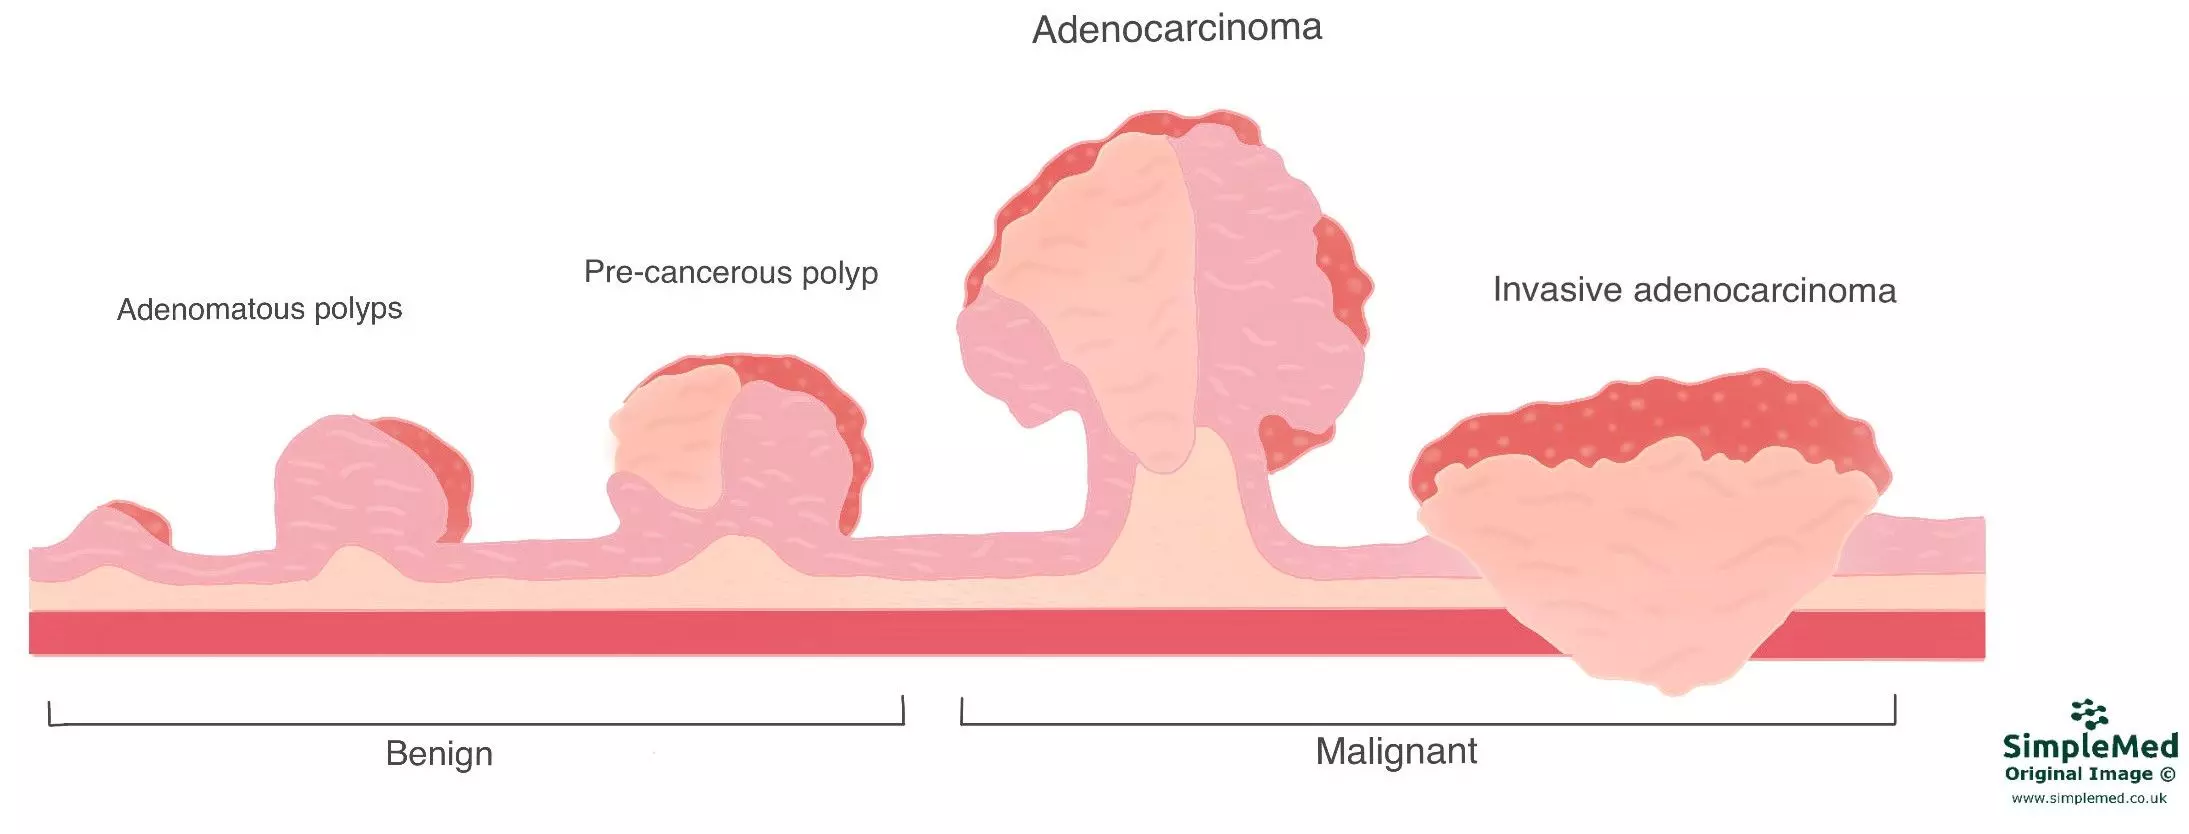 Carcinoma to Adenocarcinoma Progression SimpleMed